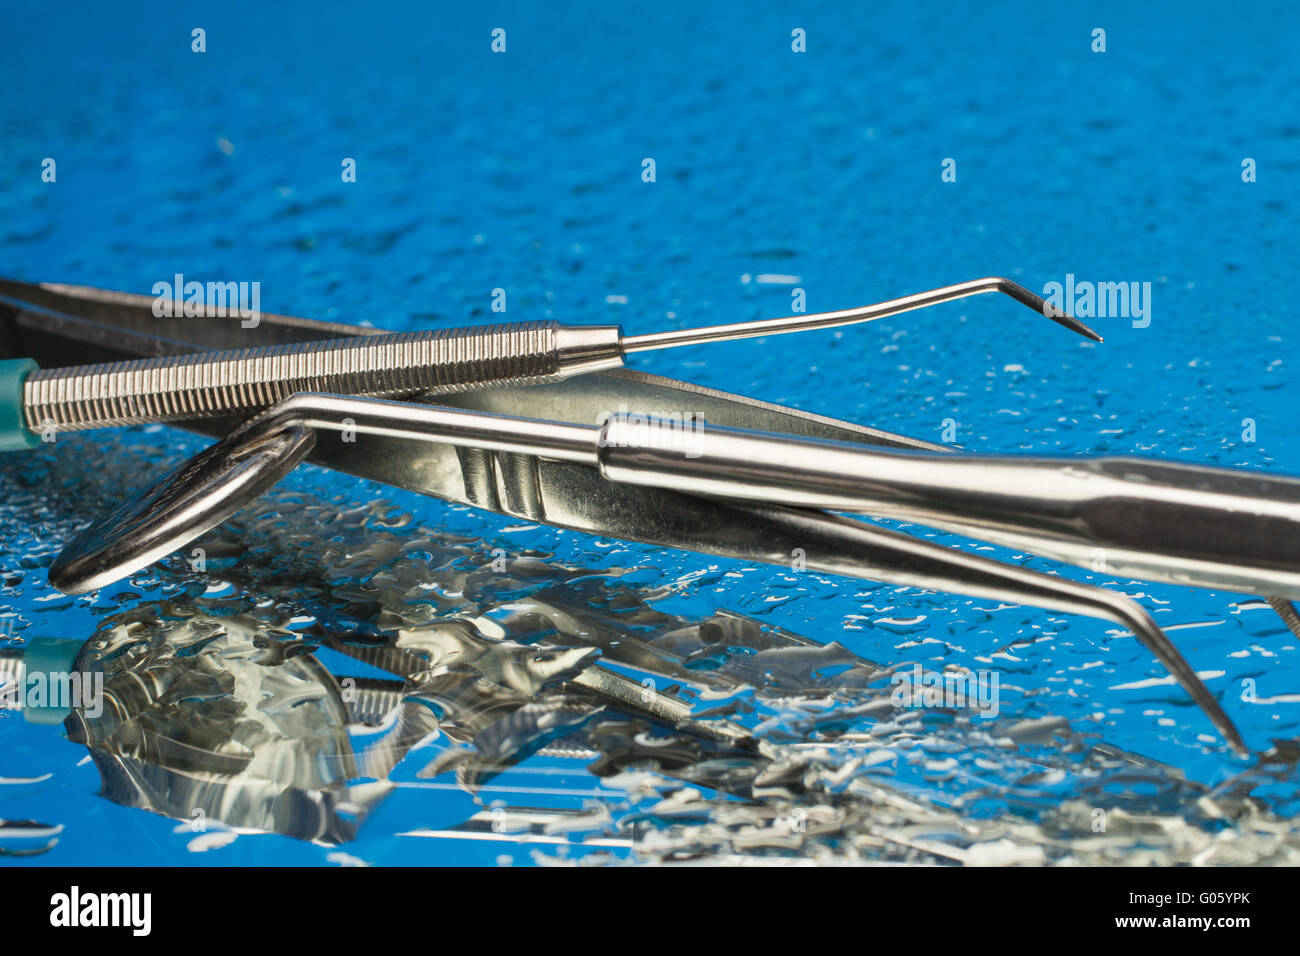 cutlery dentist mirror probe tweezers Stock Photo